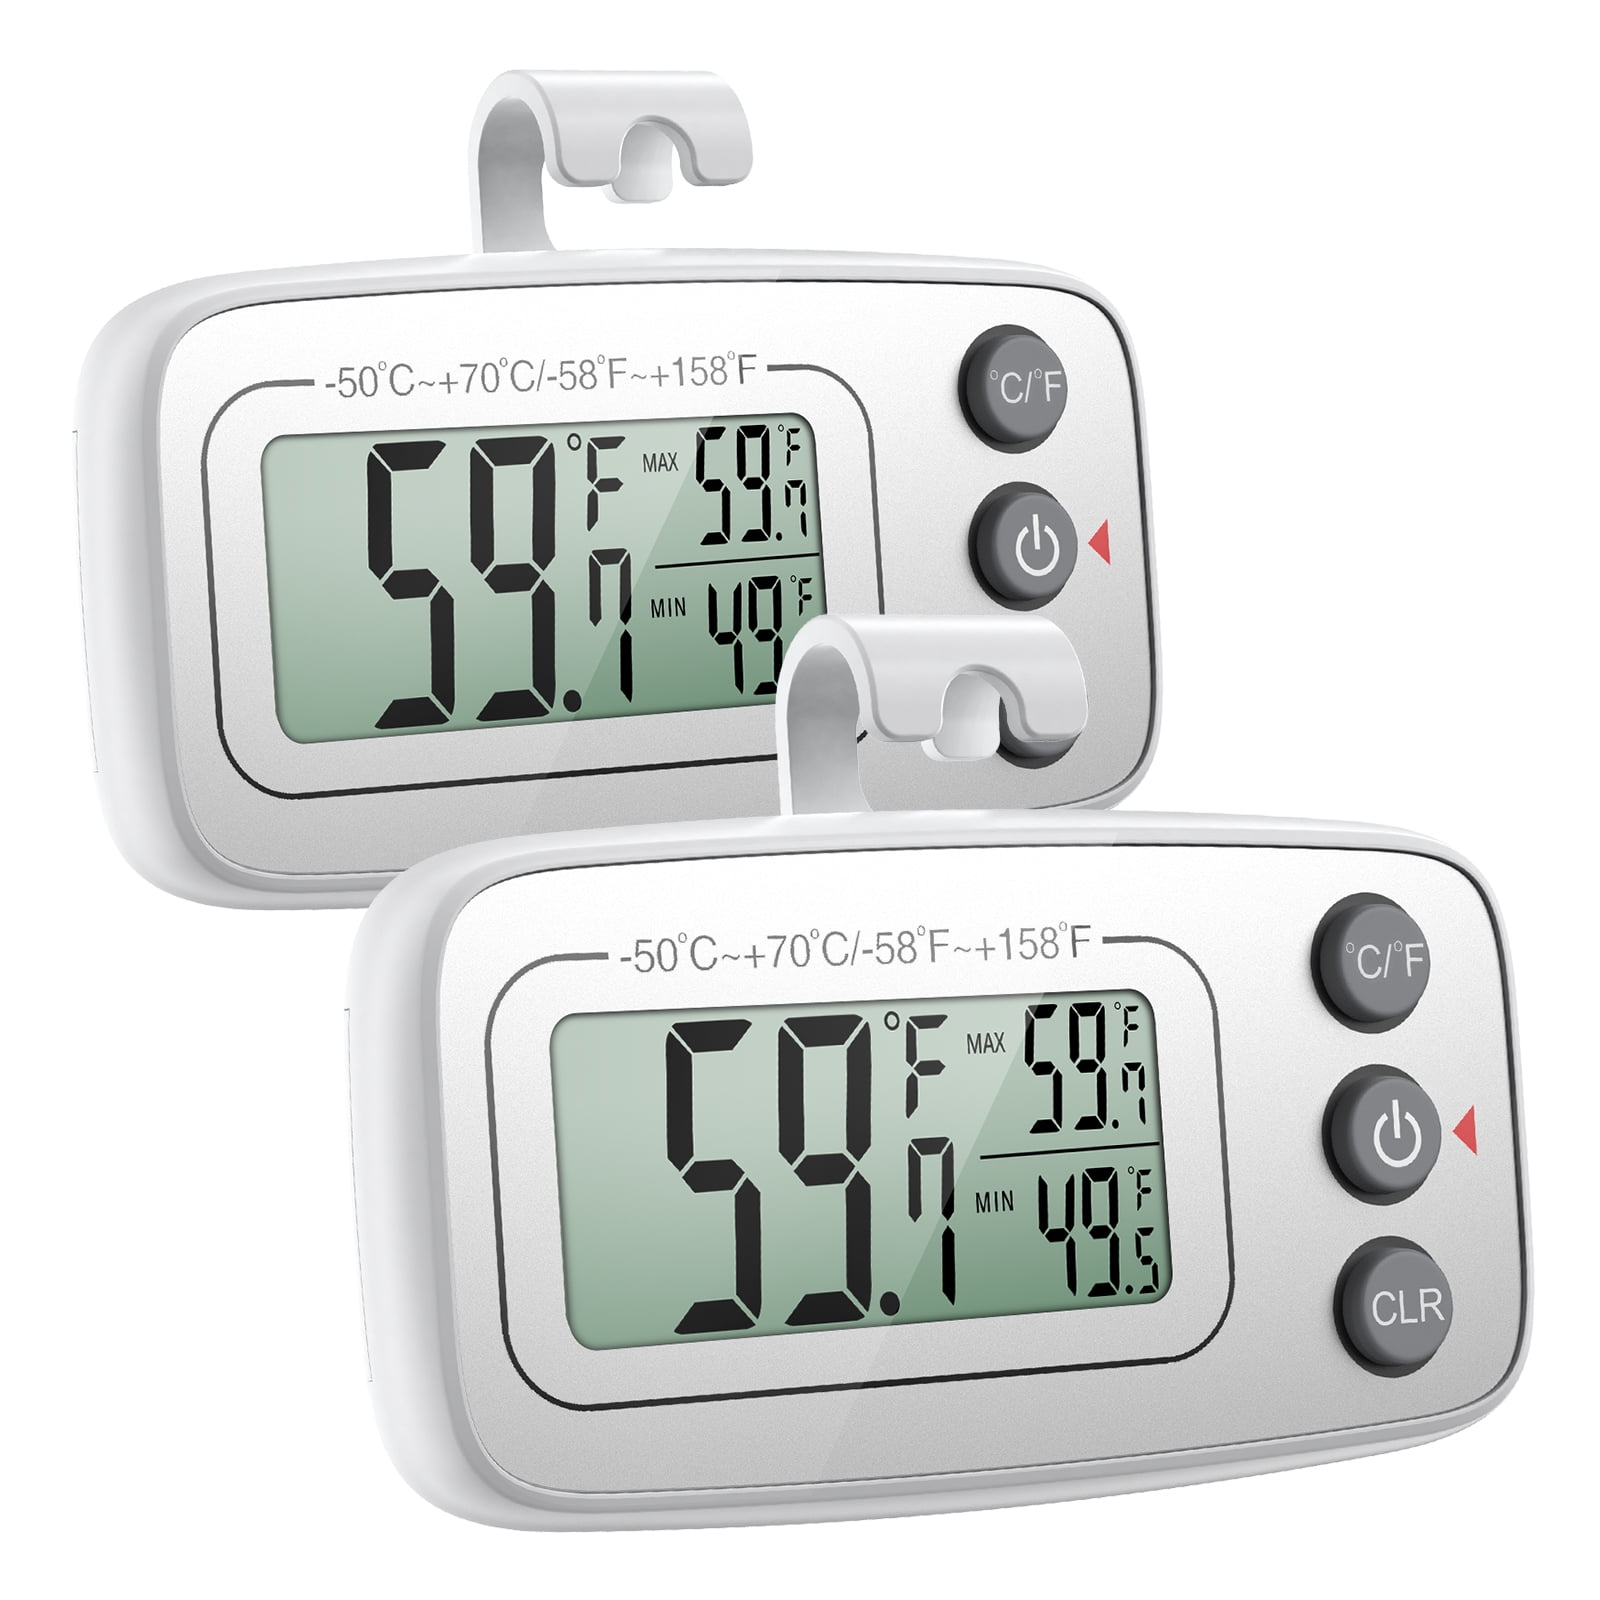 Fridge Freezer Digital Thermometer With Min/Max & CURRENT